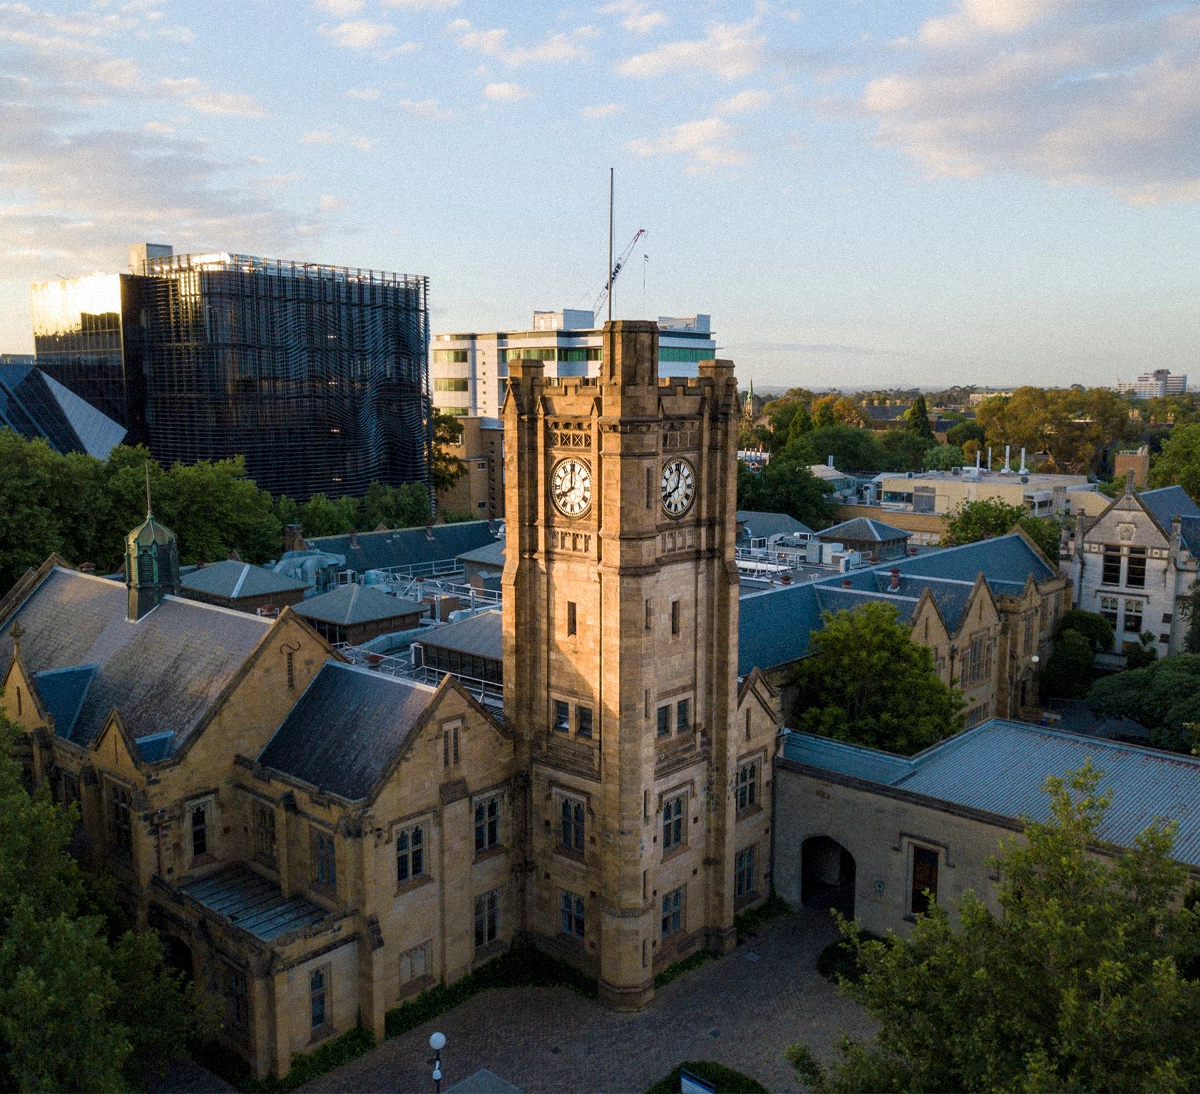 University-of-Melbourne